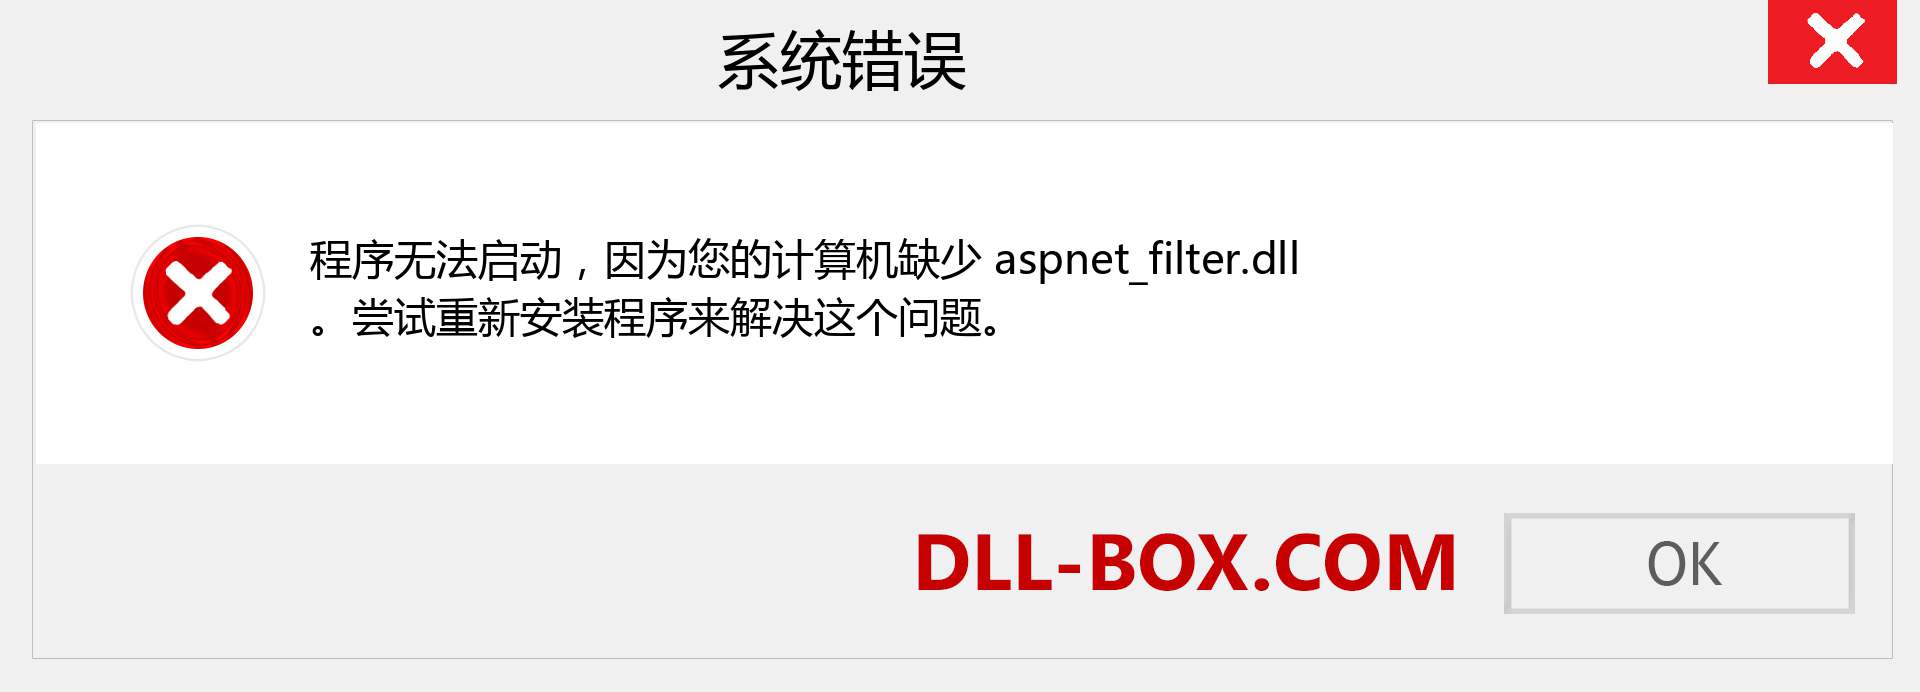 aspnet_filter.dll 文件丢失？。 适用于 Windows 7、8、10 的下载 - 修复 Windows、照片、图像上的 aspnet_filter dll 丢失错误